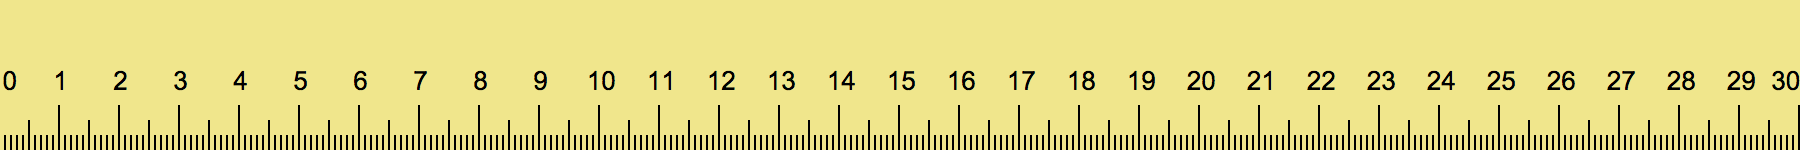 centimeter ruler real life size